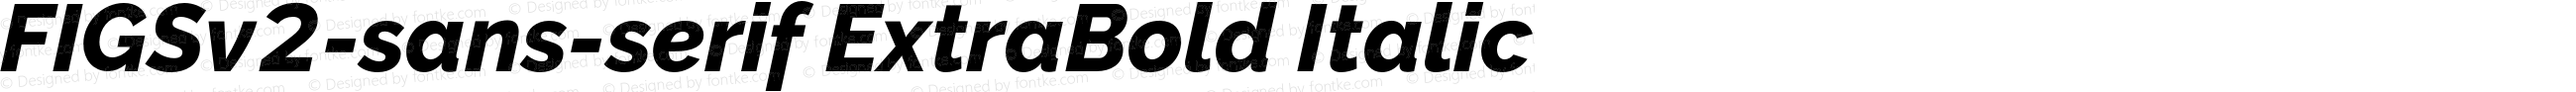 FIGSv2-sans-serif ExtraBold Italic